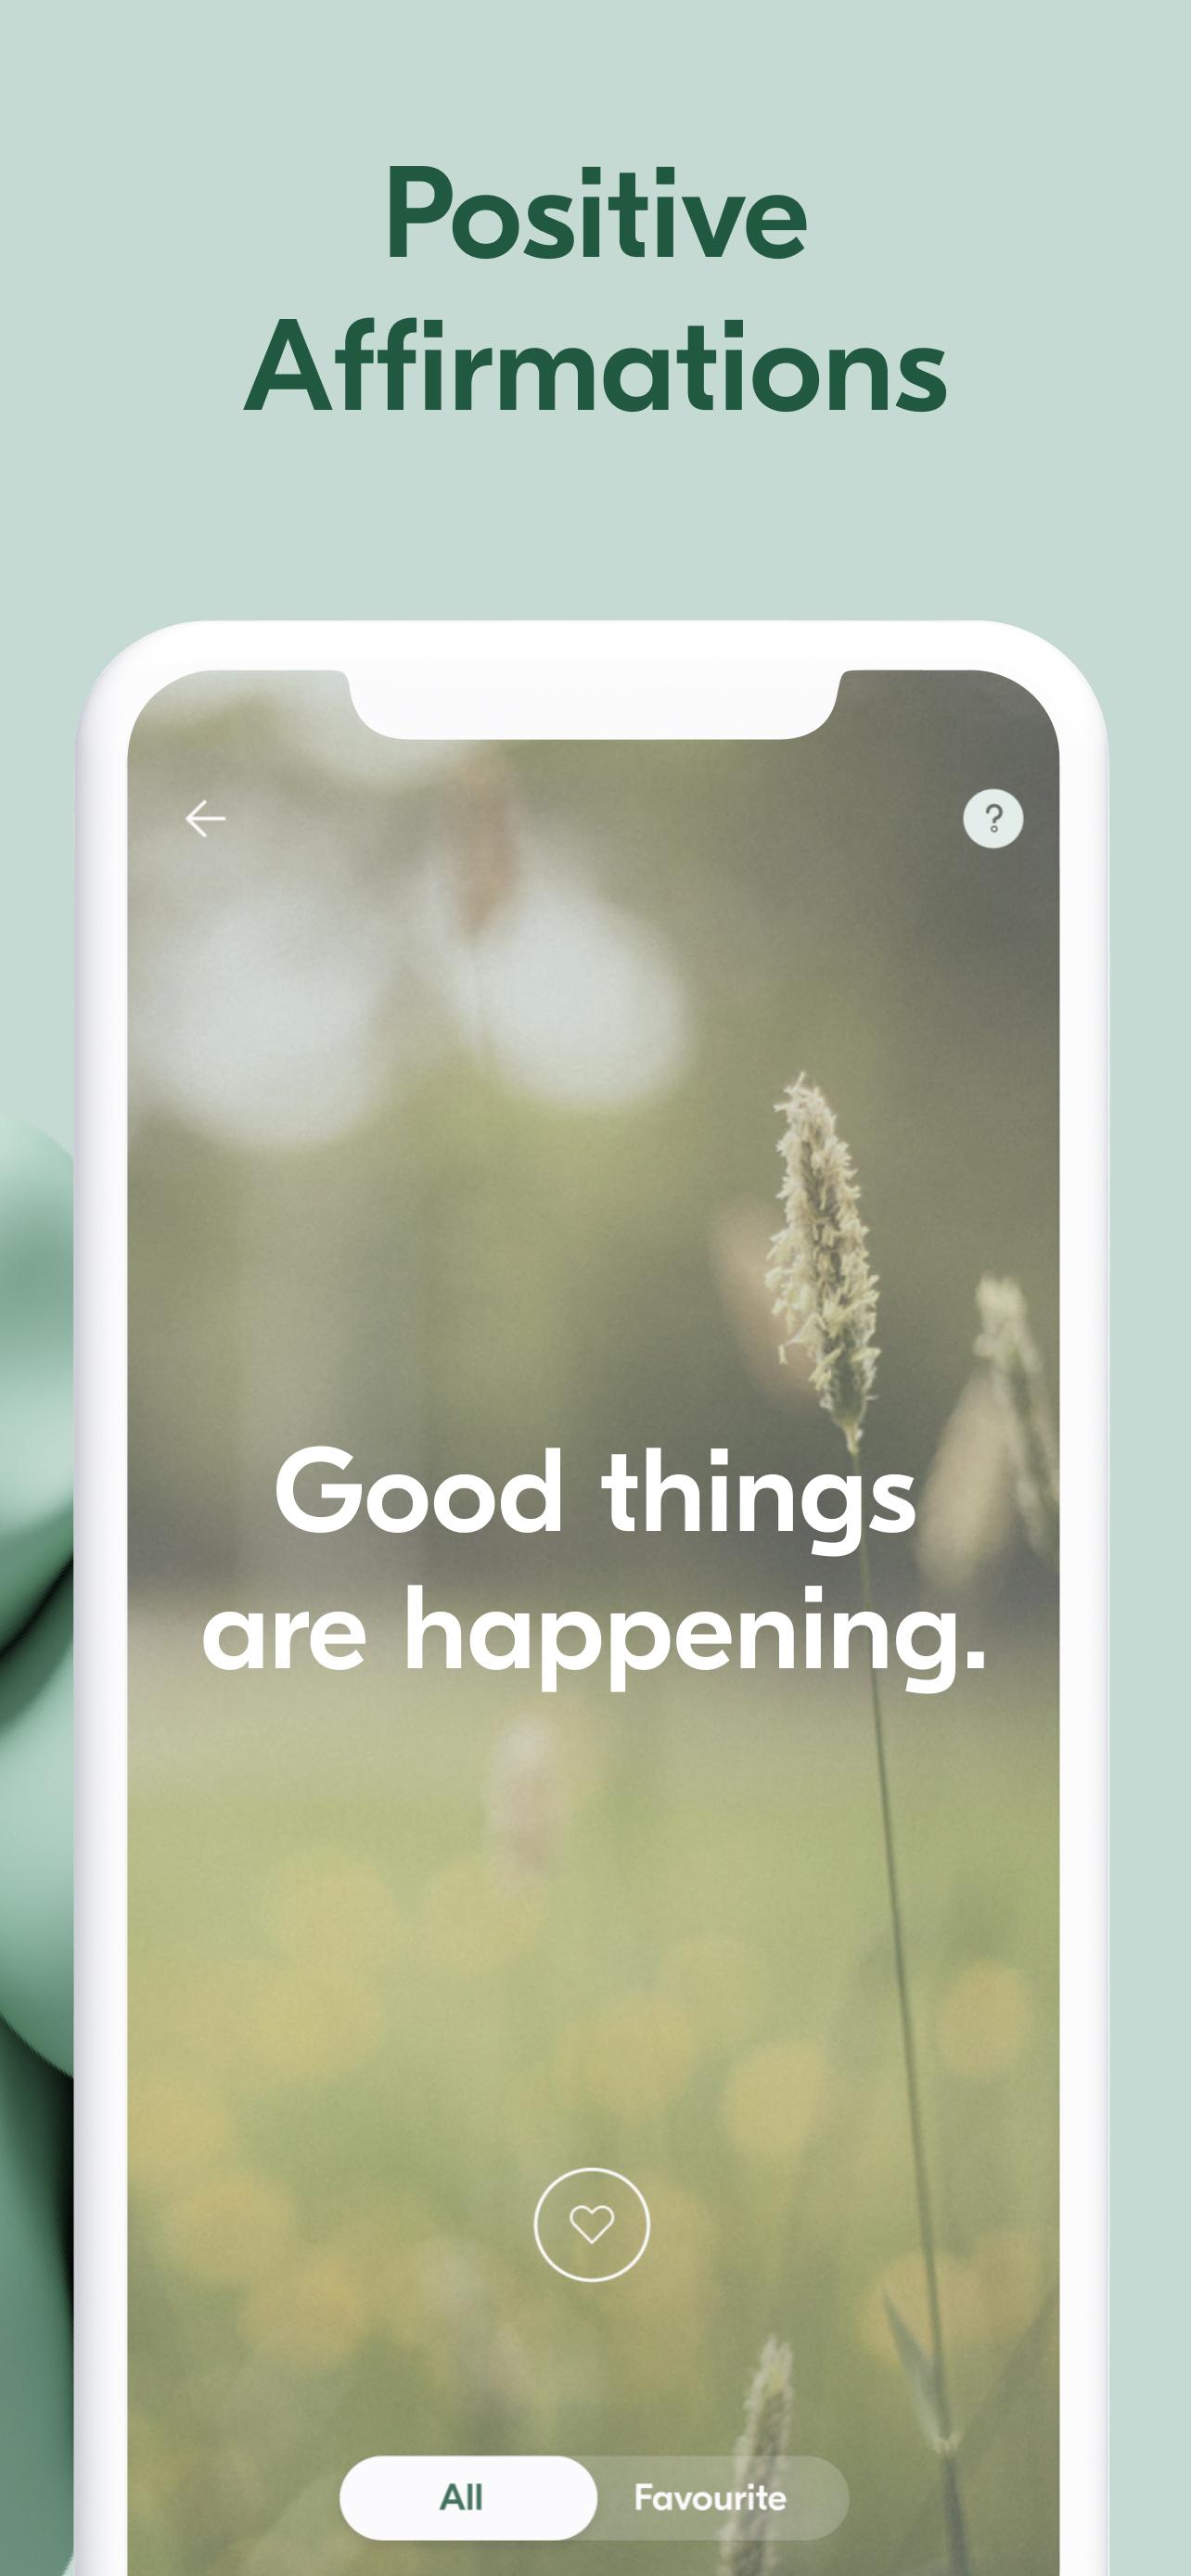 VOS Diary, Smart Journal & Mood Tracker App 1.9.1 Screenshot 3